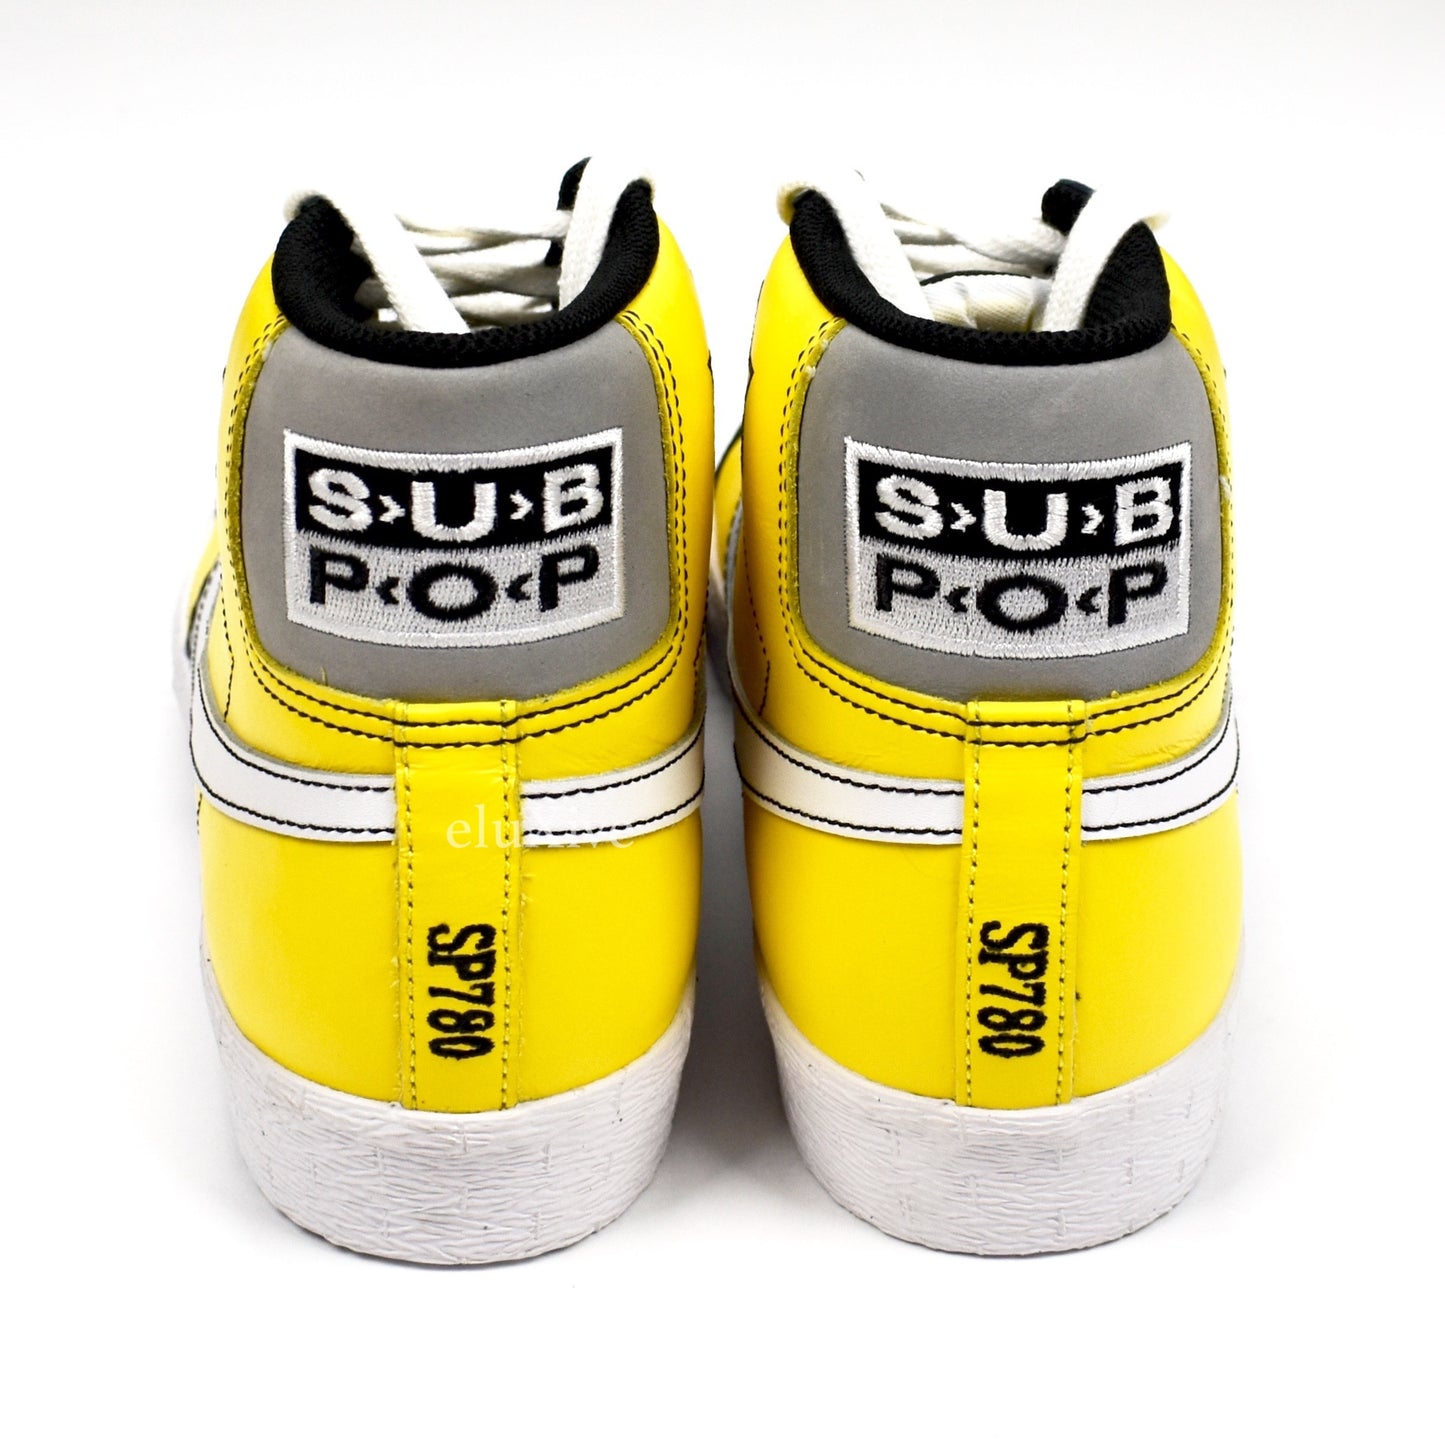 Nike - Blazer SB Elite 'Sub Pop Records'